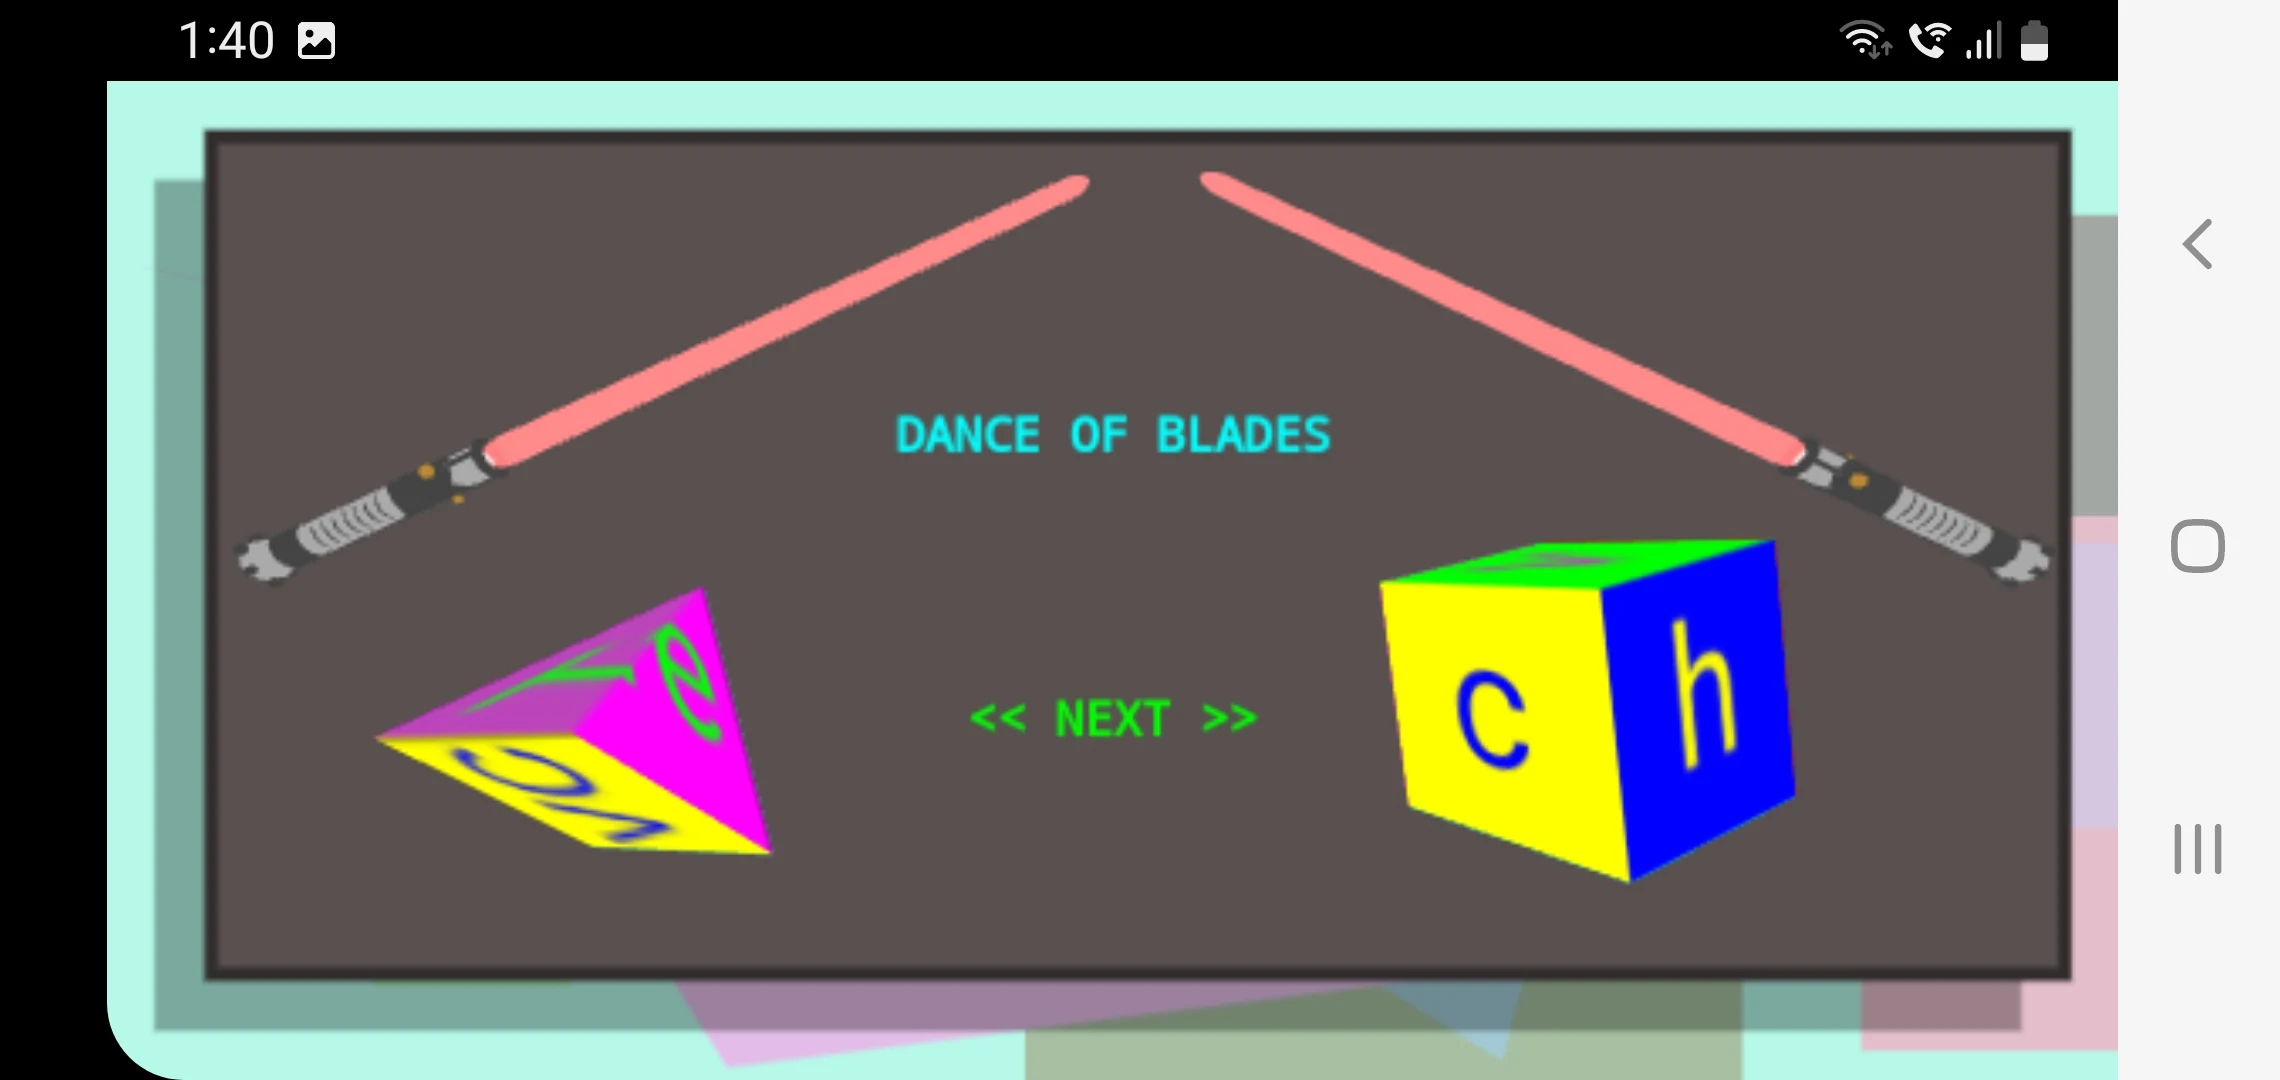 Dance of blades